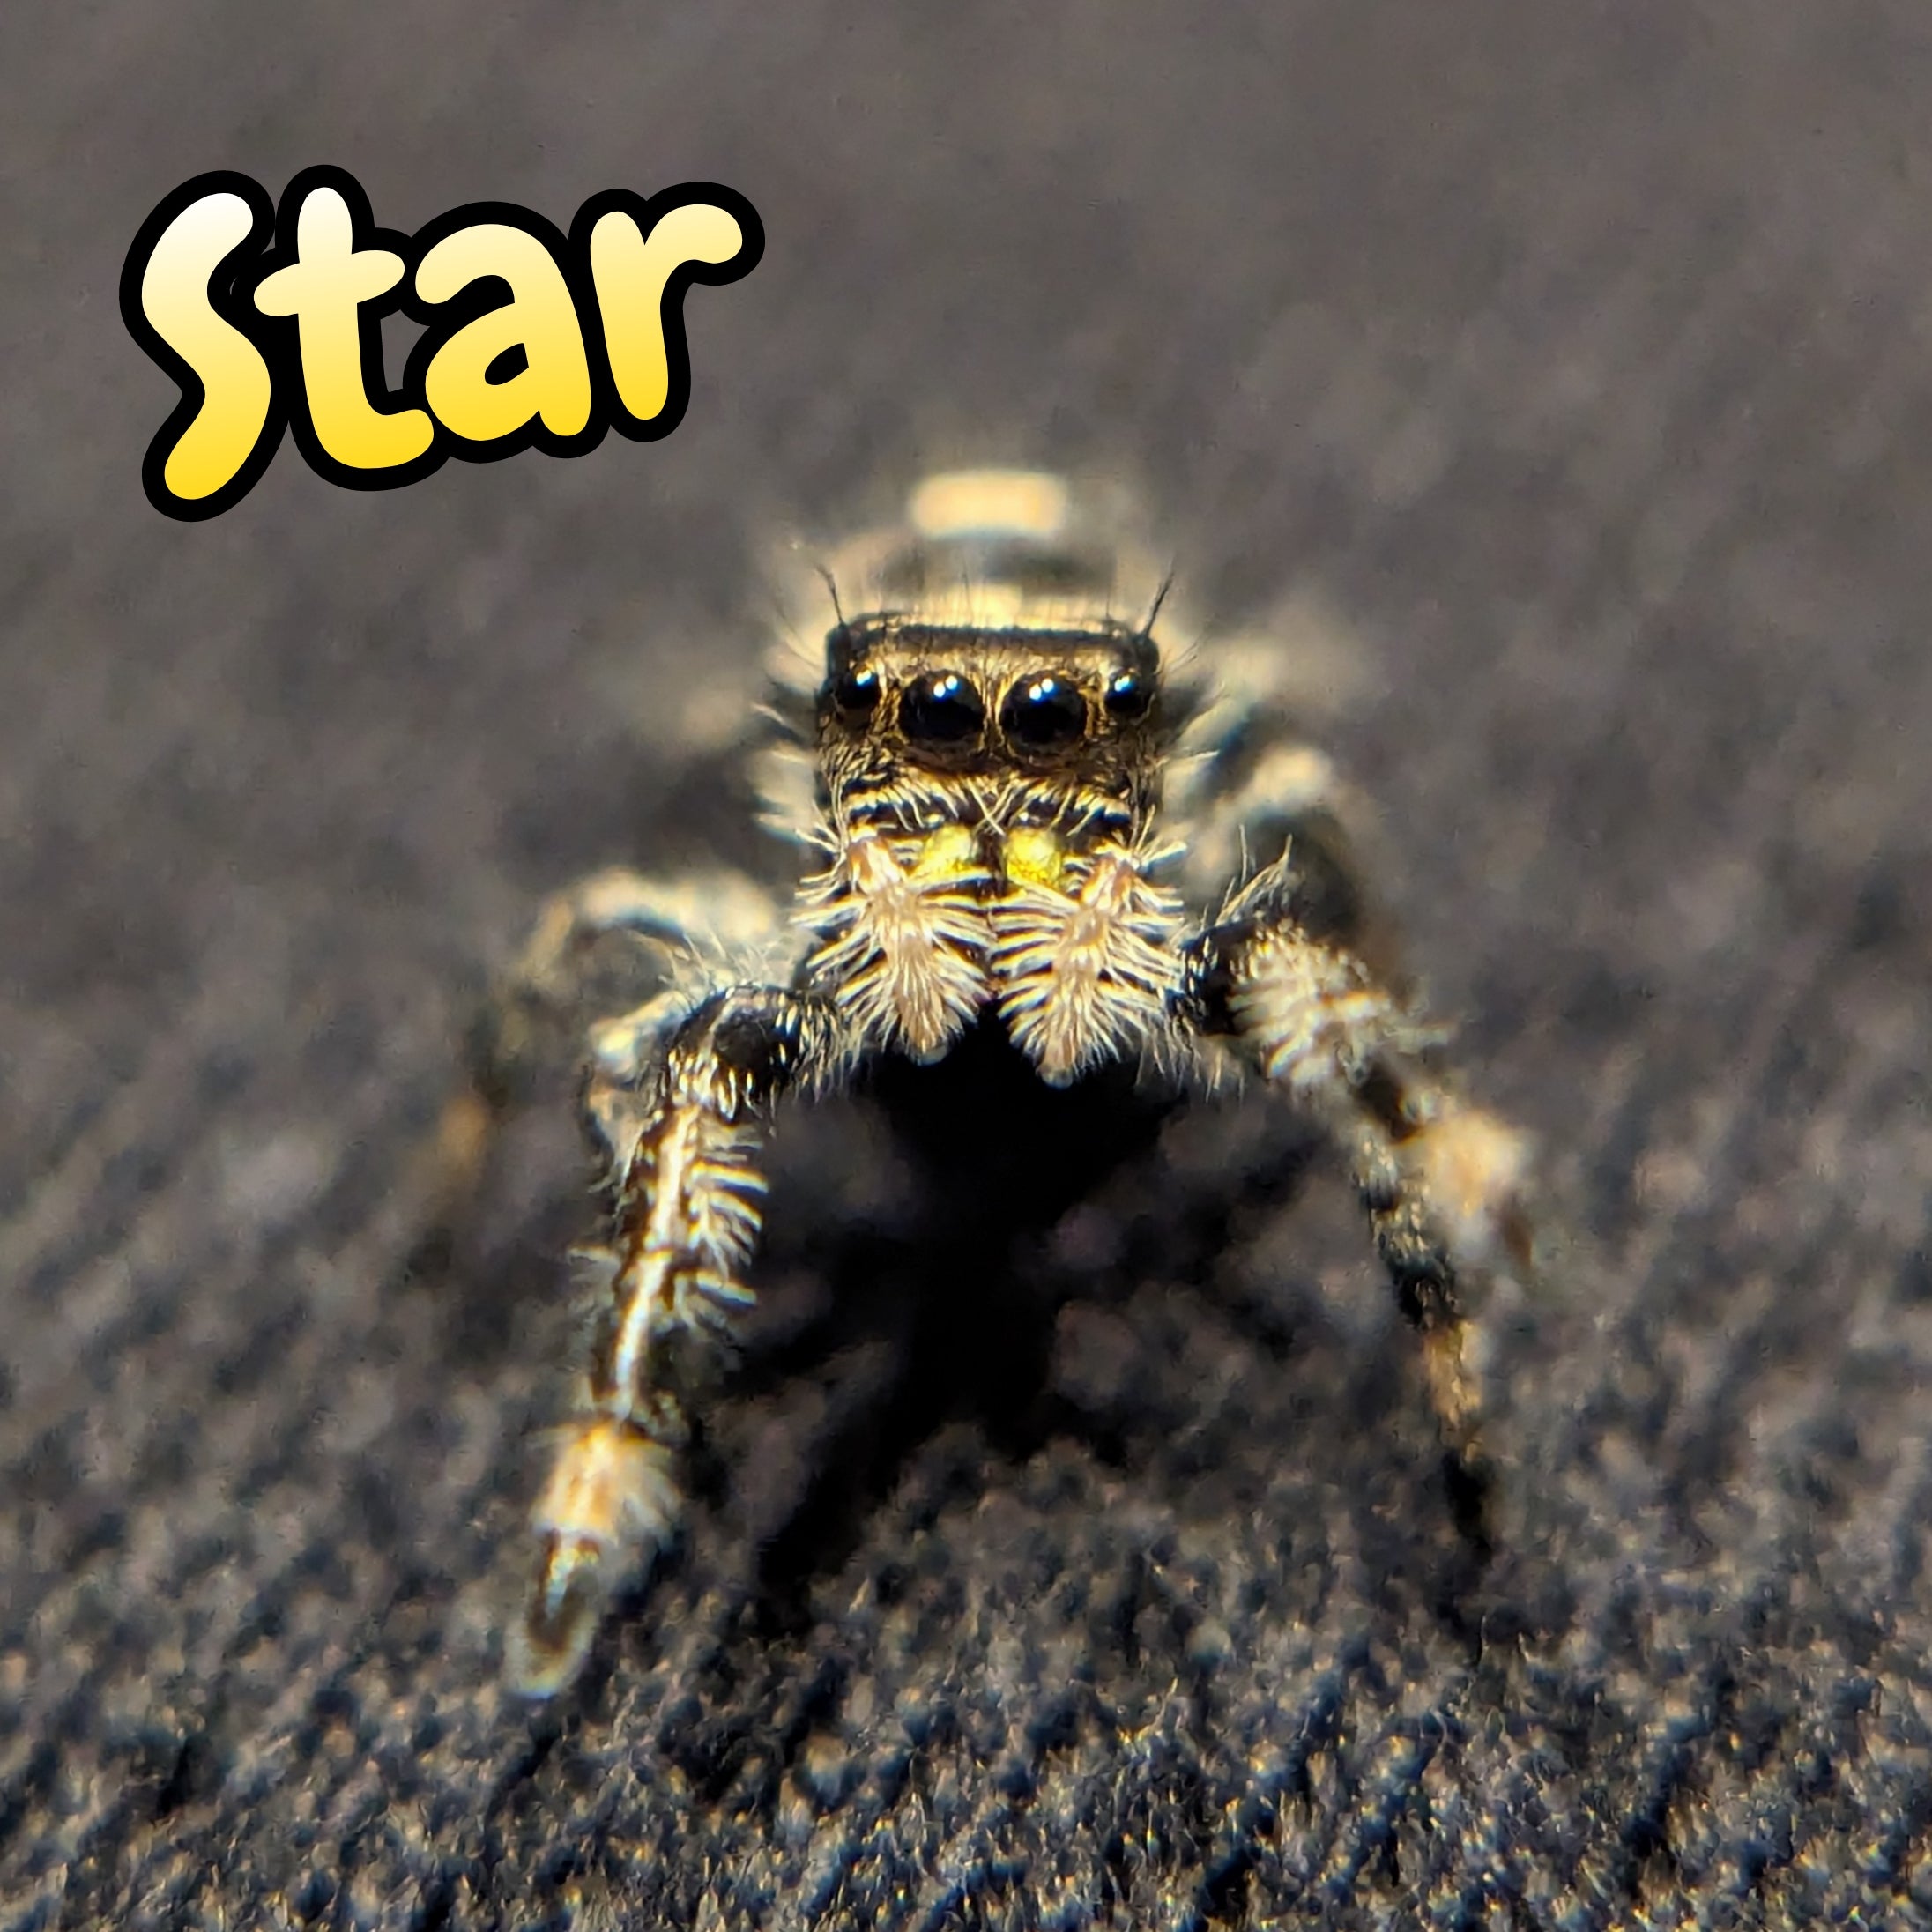 Regal Jumping Spider "Star" (Dark Phase)